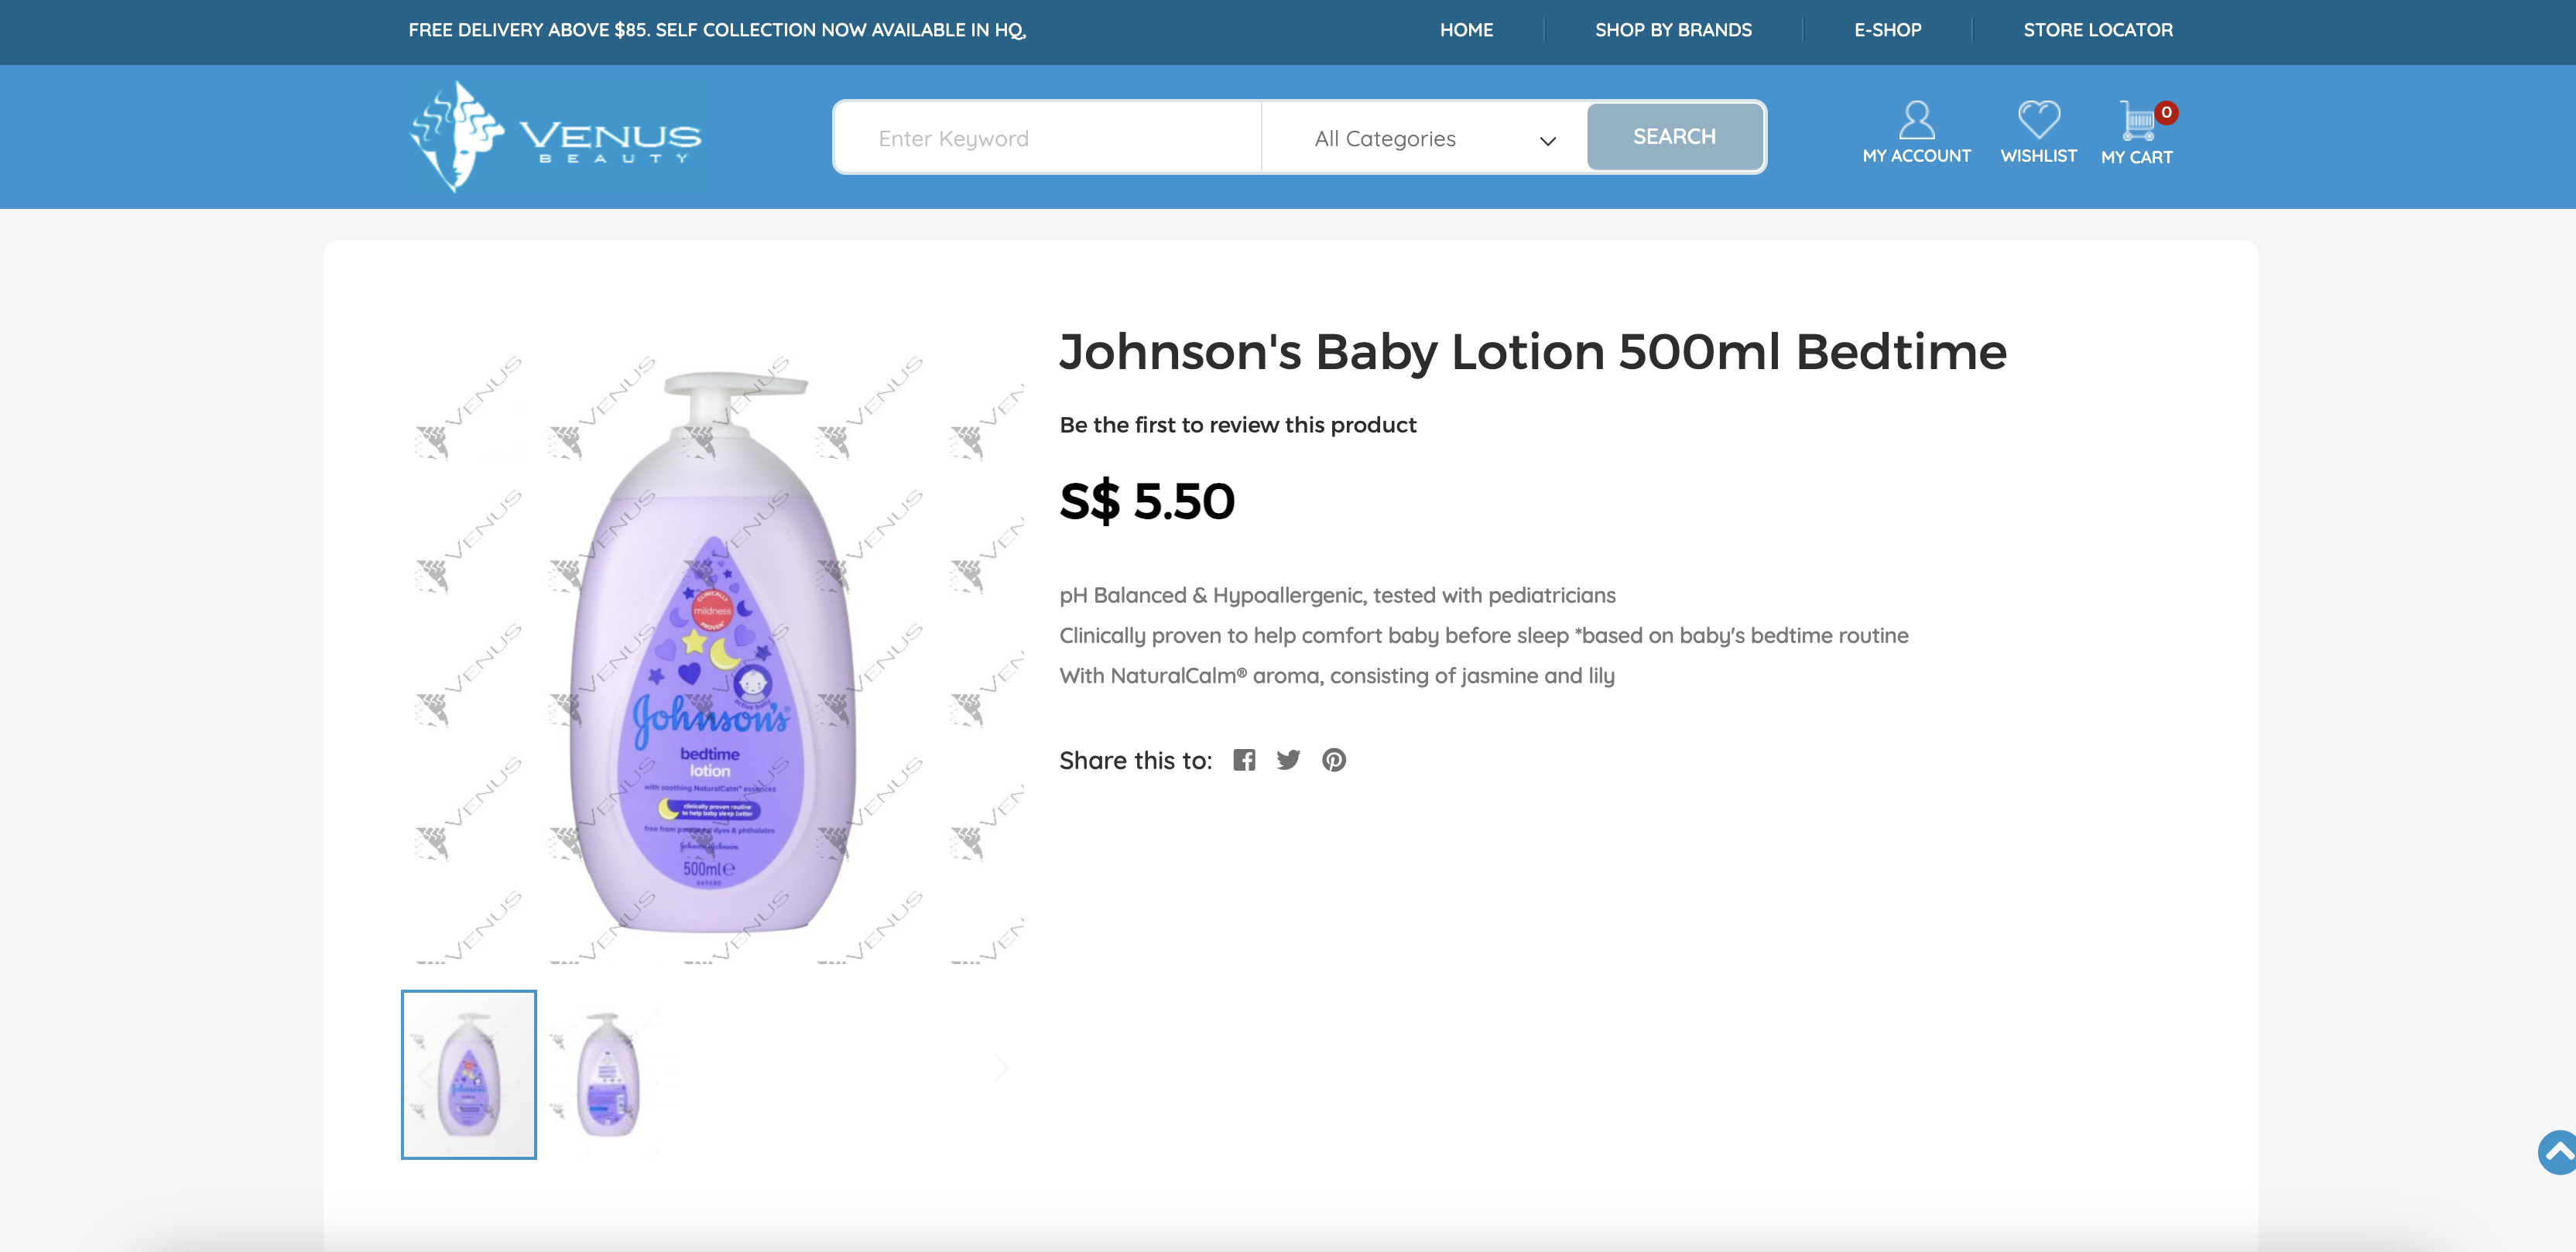 Johnson's Baby Lotion 500ml Bedtime